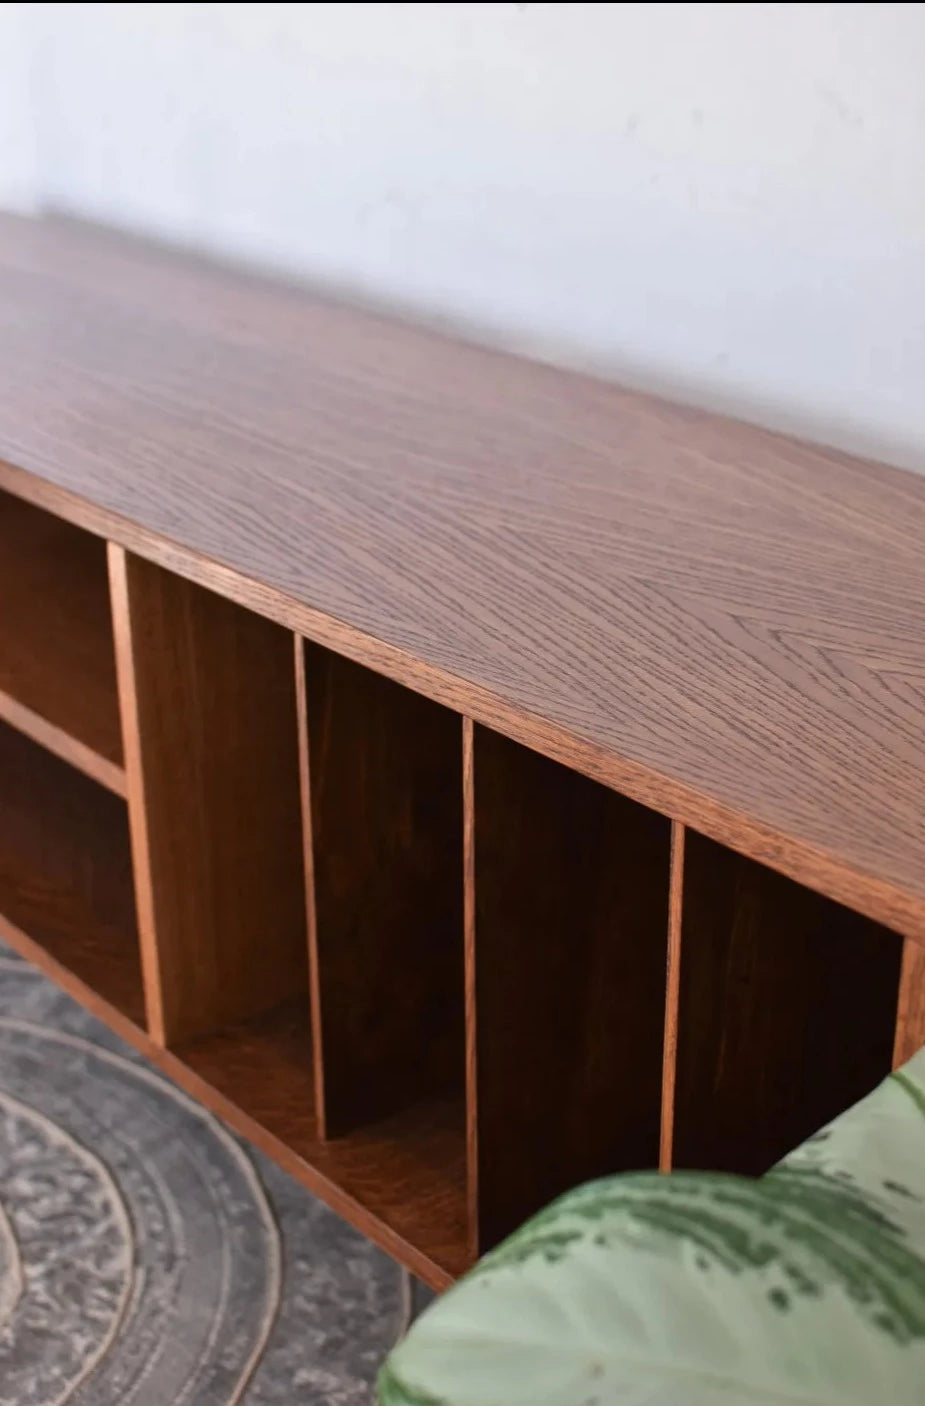 LOTV VINYL oak wood chest of drawers